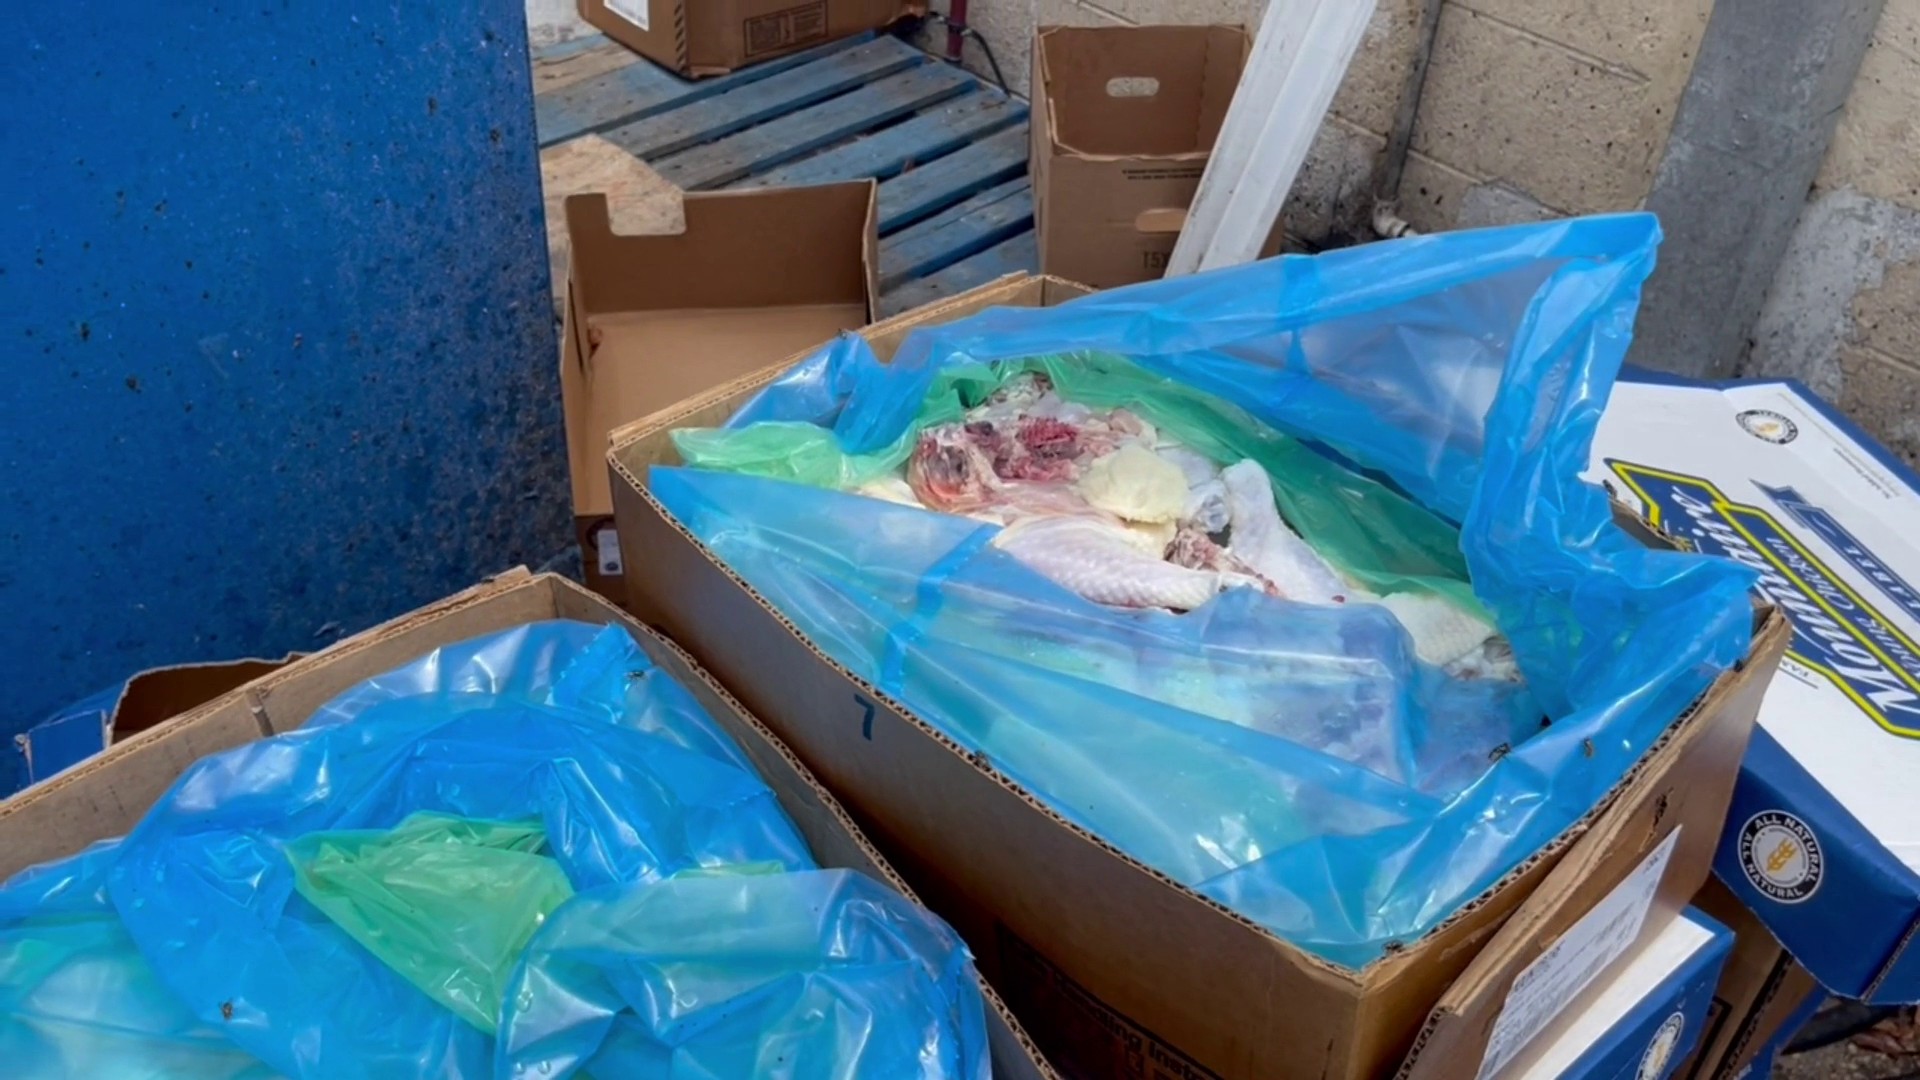 Employee photographs dead rat inside catering business; Matchbox at Sawgrass  Mills also ordered shut